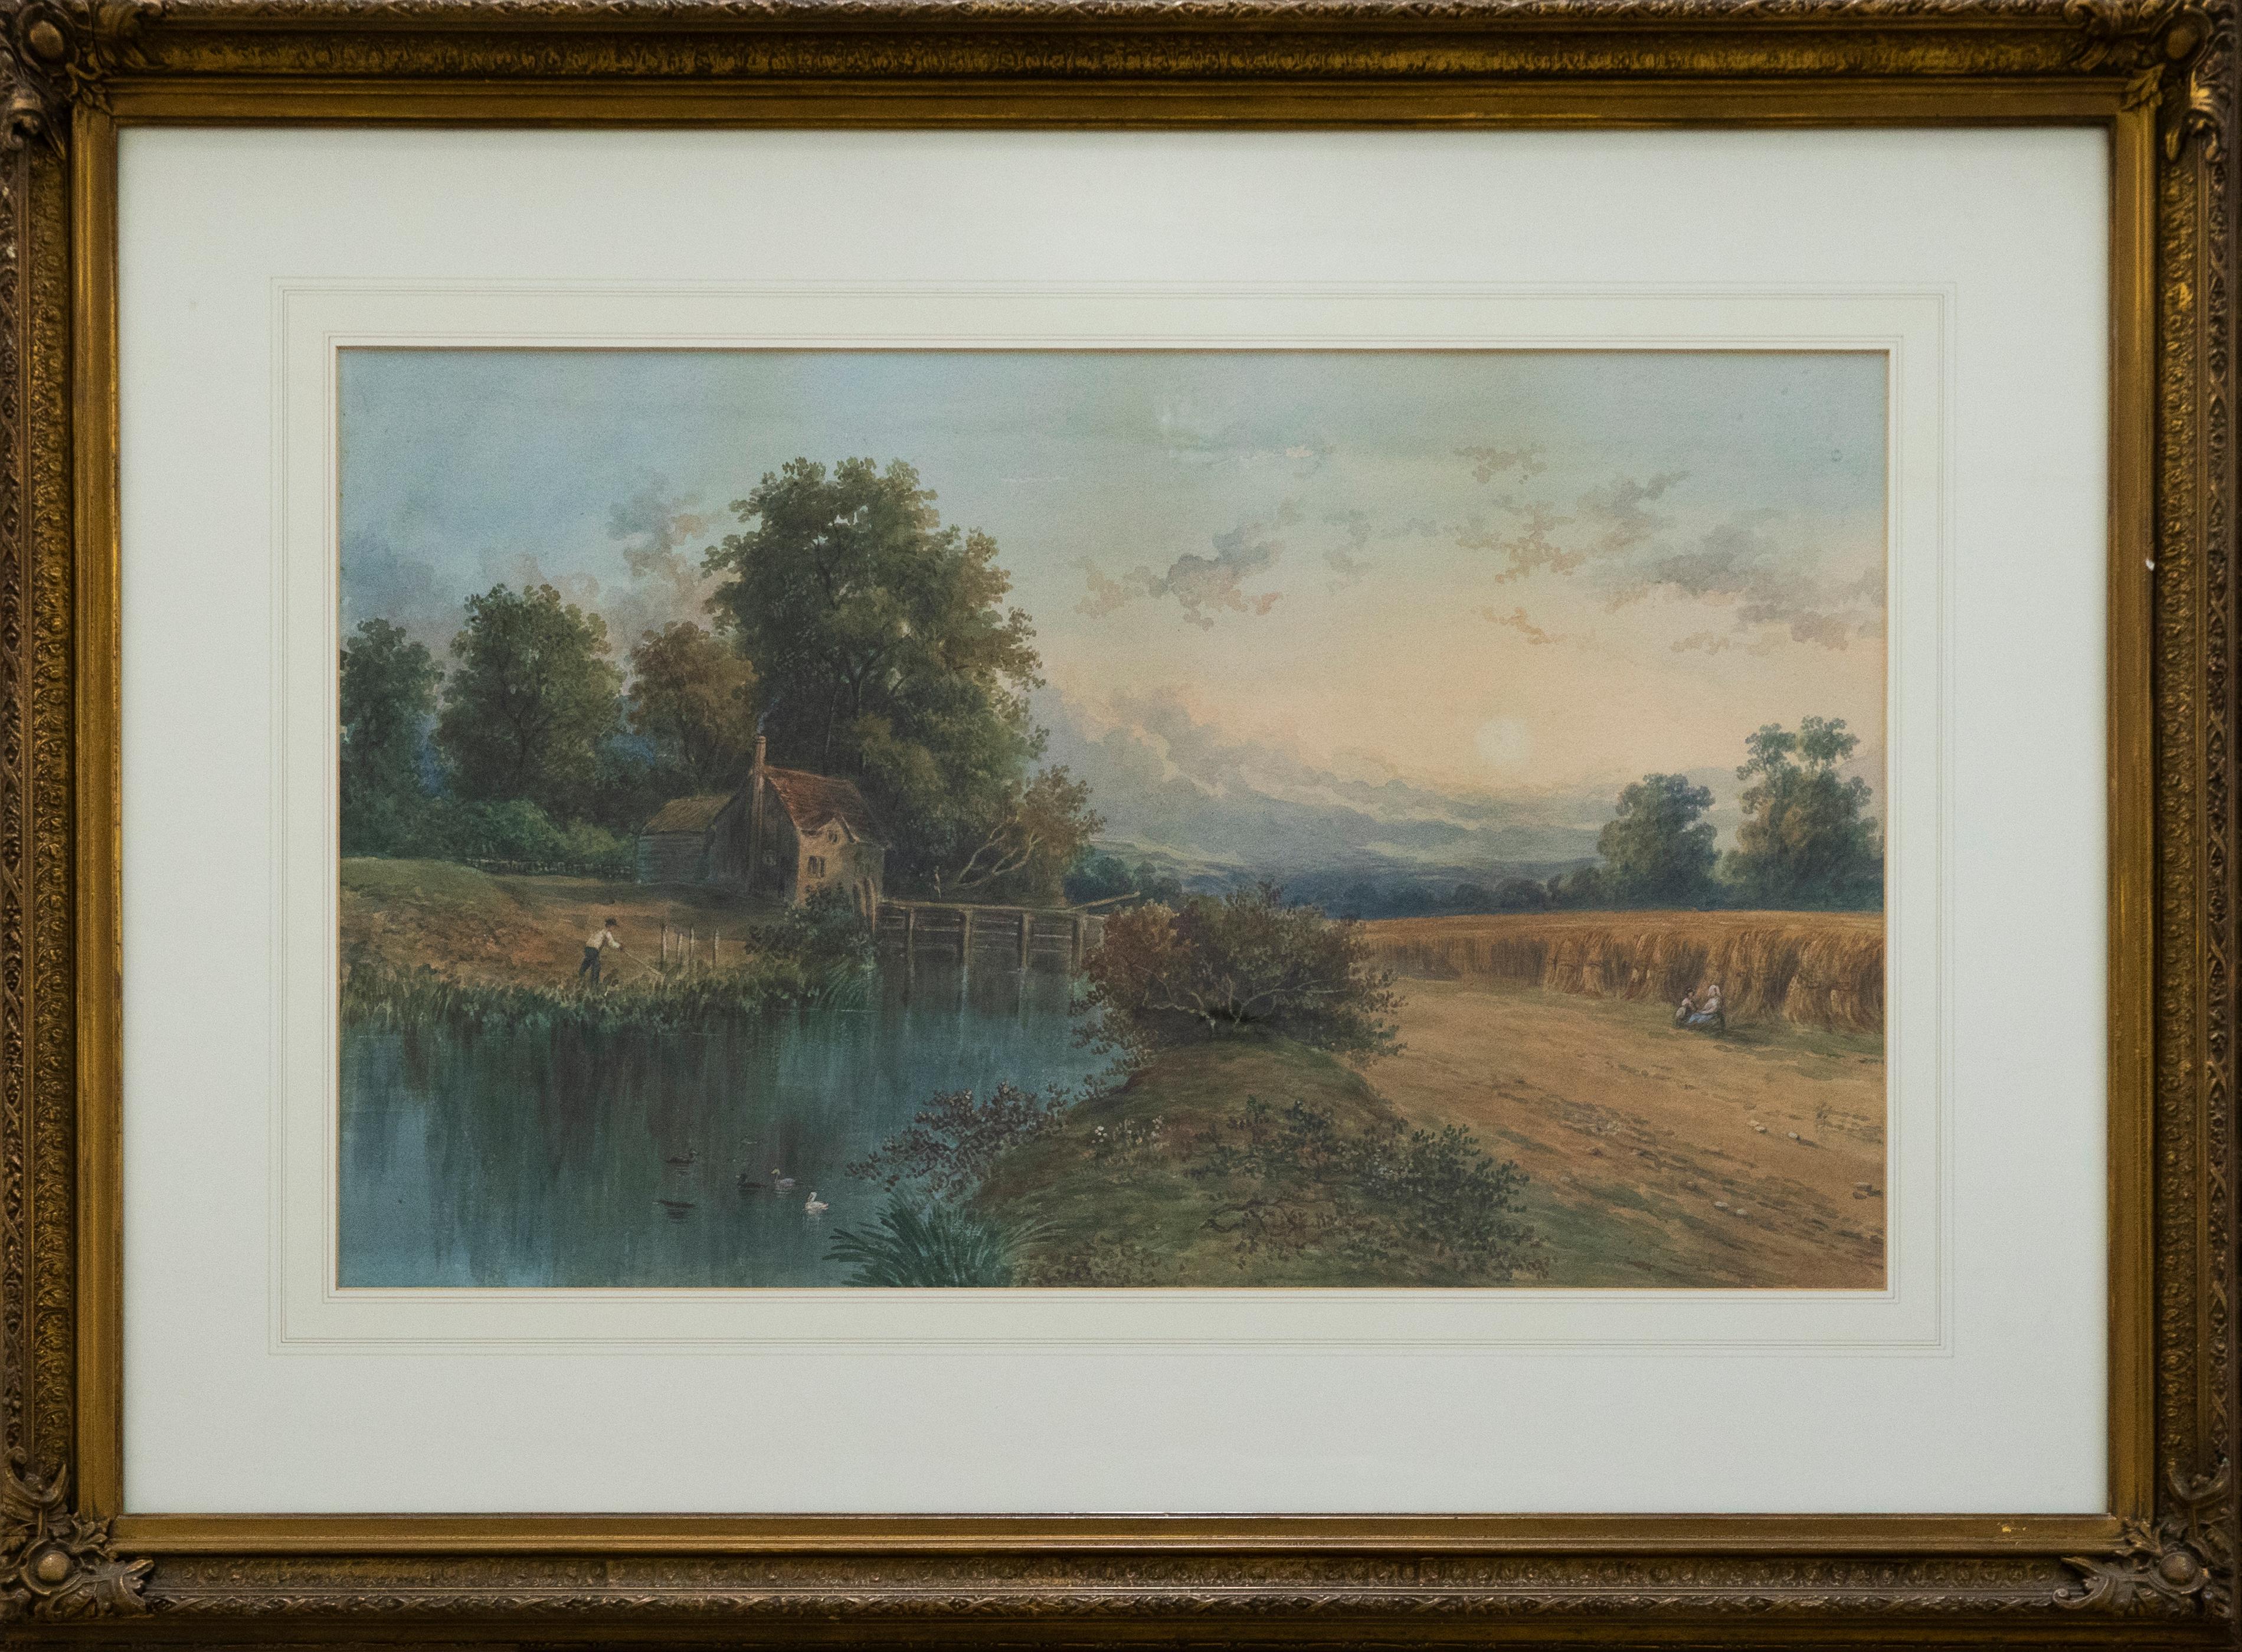 Unknown Landscape Art - Late 19th Century Watercolour - Angler at the Farm